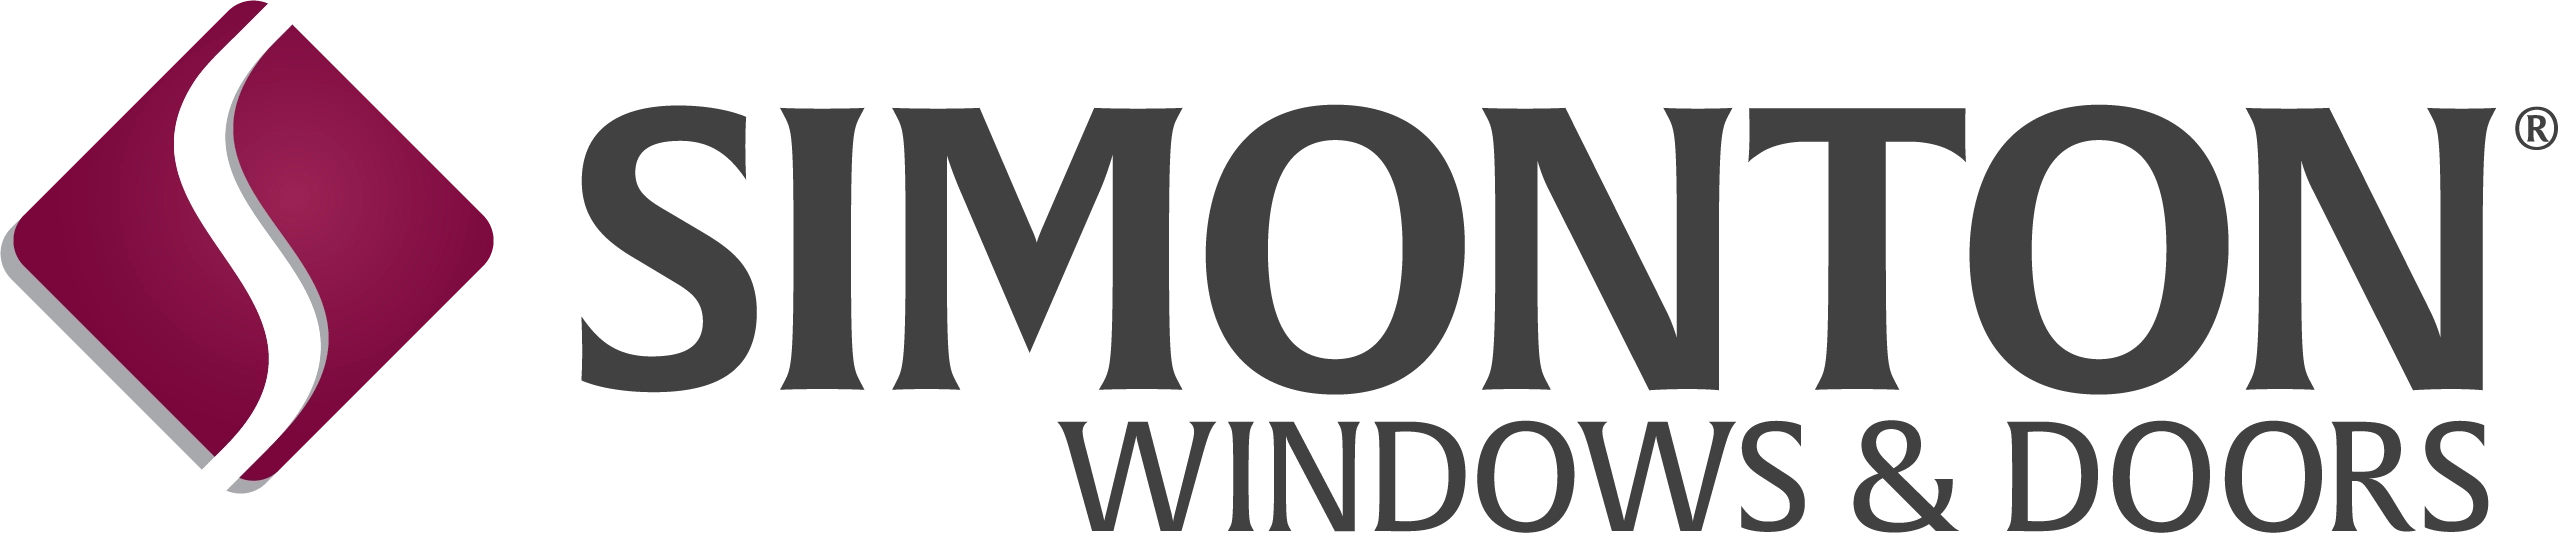 Simonton Windows & Doors - Cornerstone Building Brands Logo